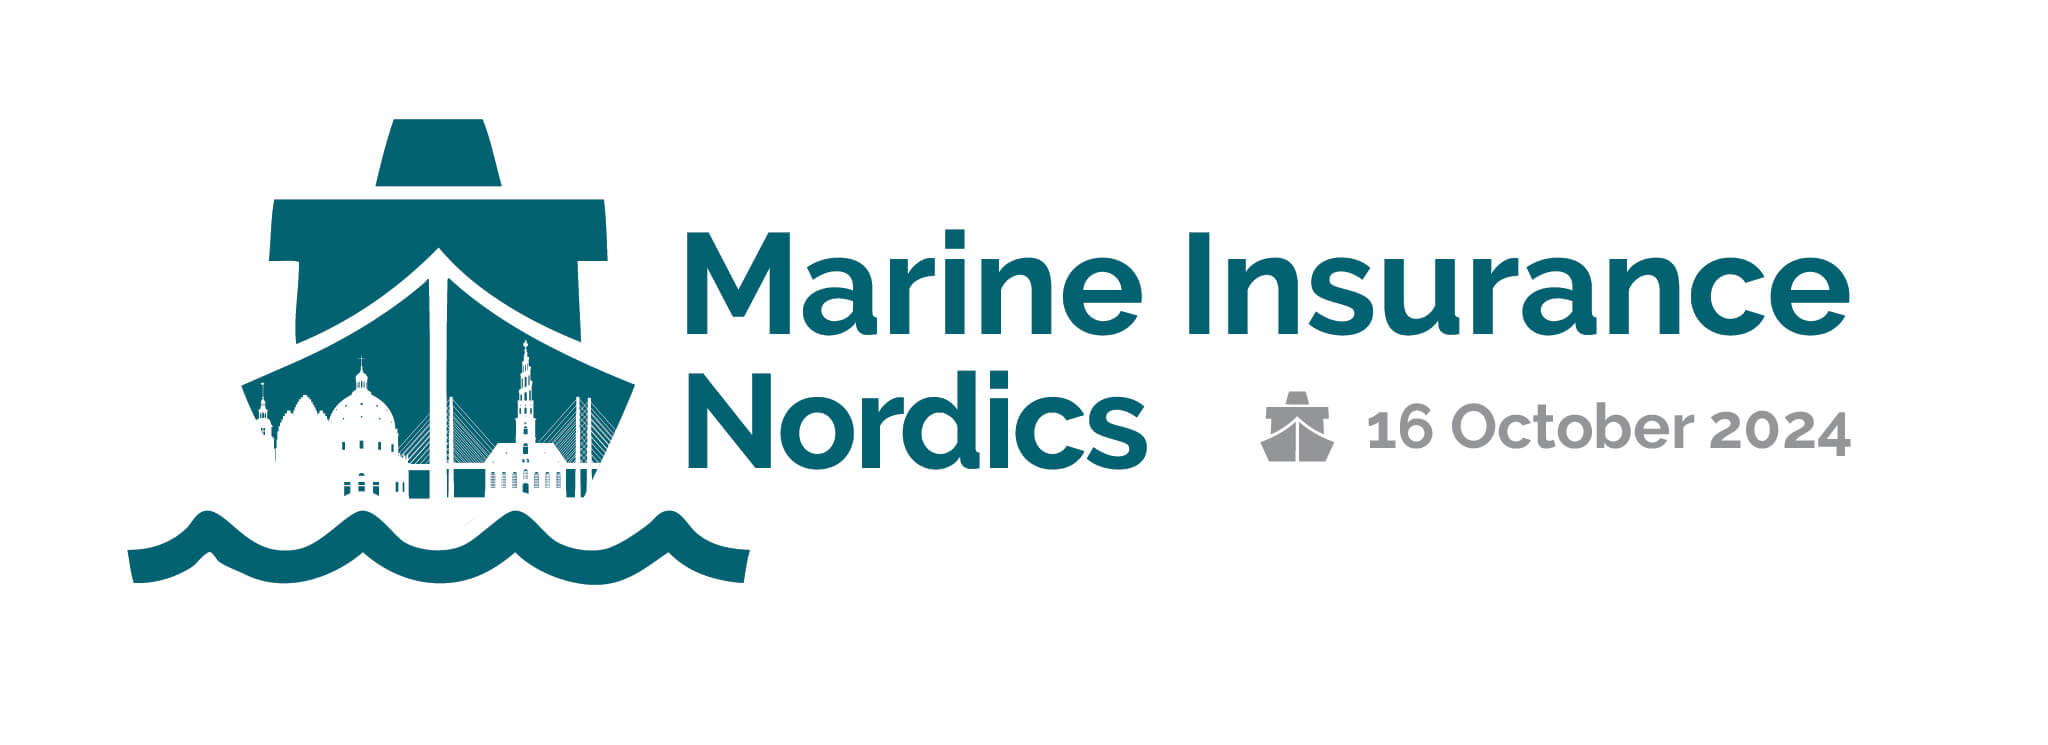 Marine Insurance Nordics